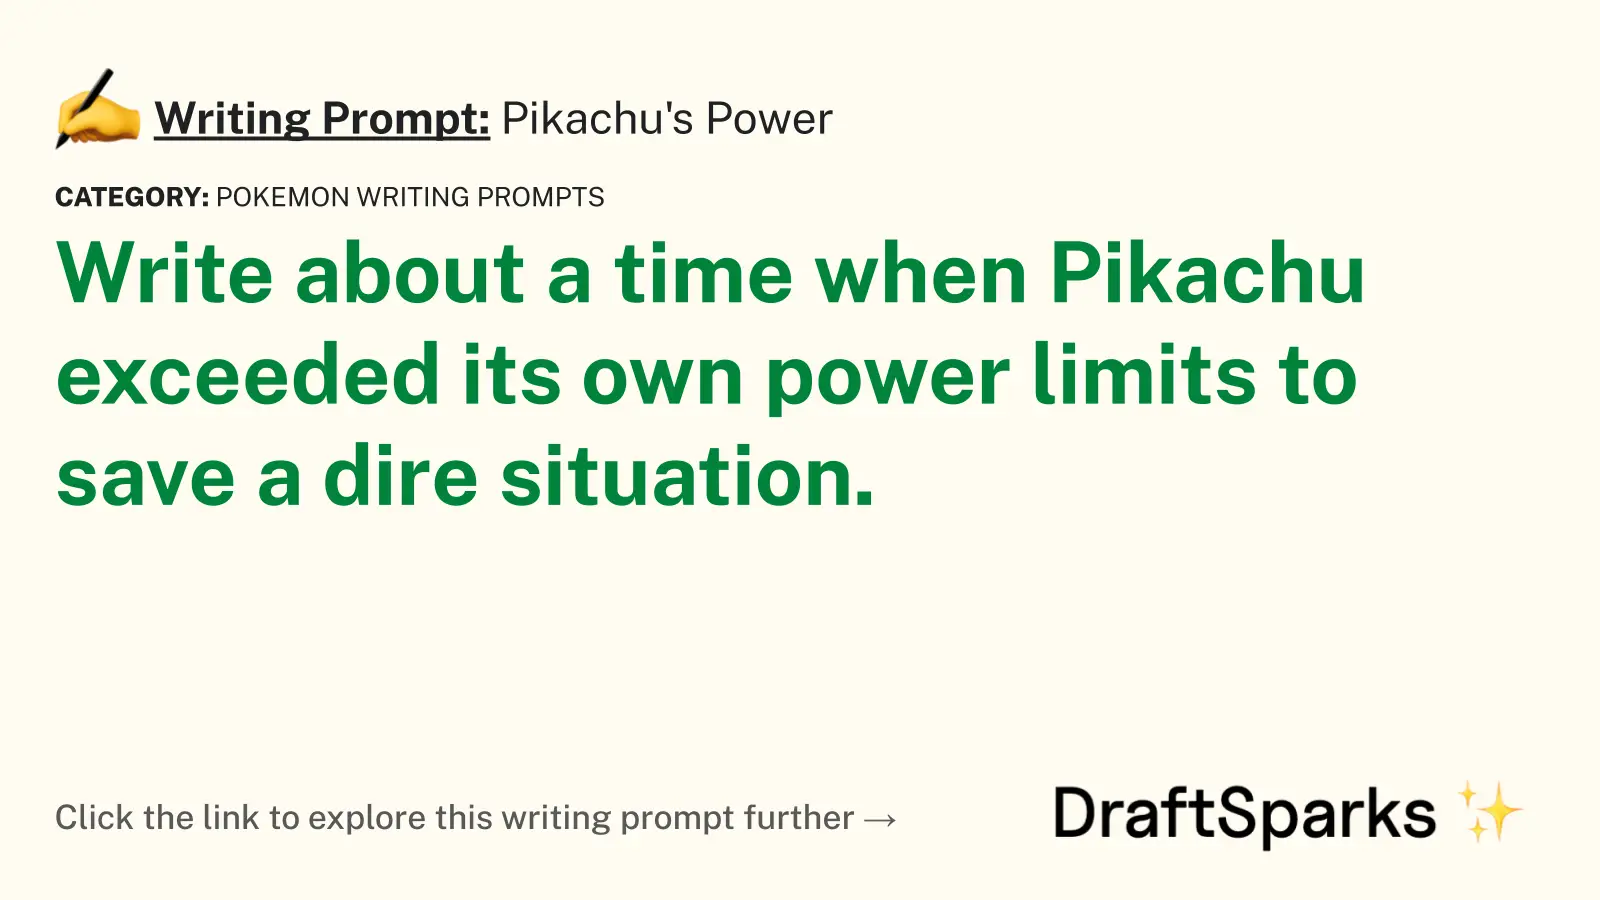 Pikachu’s Power